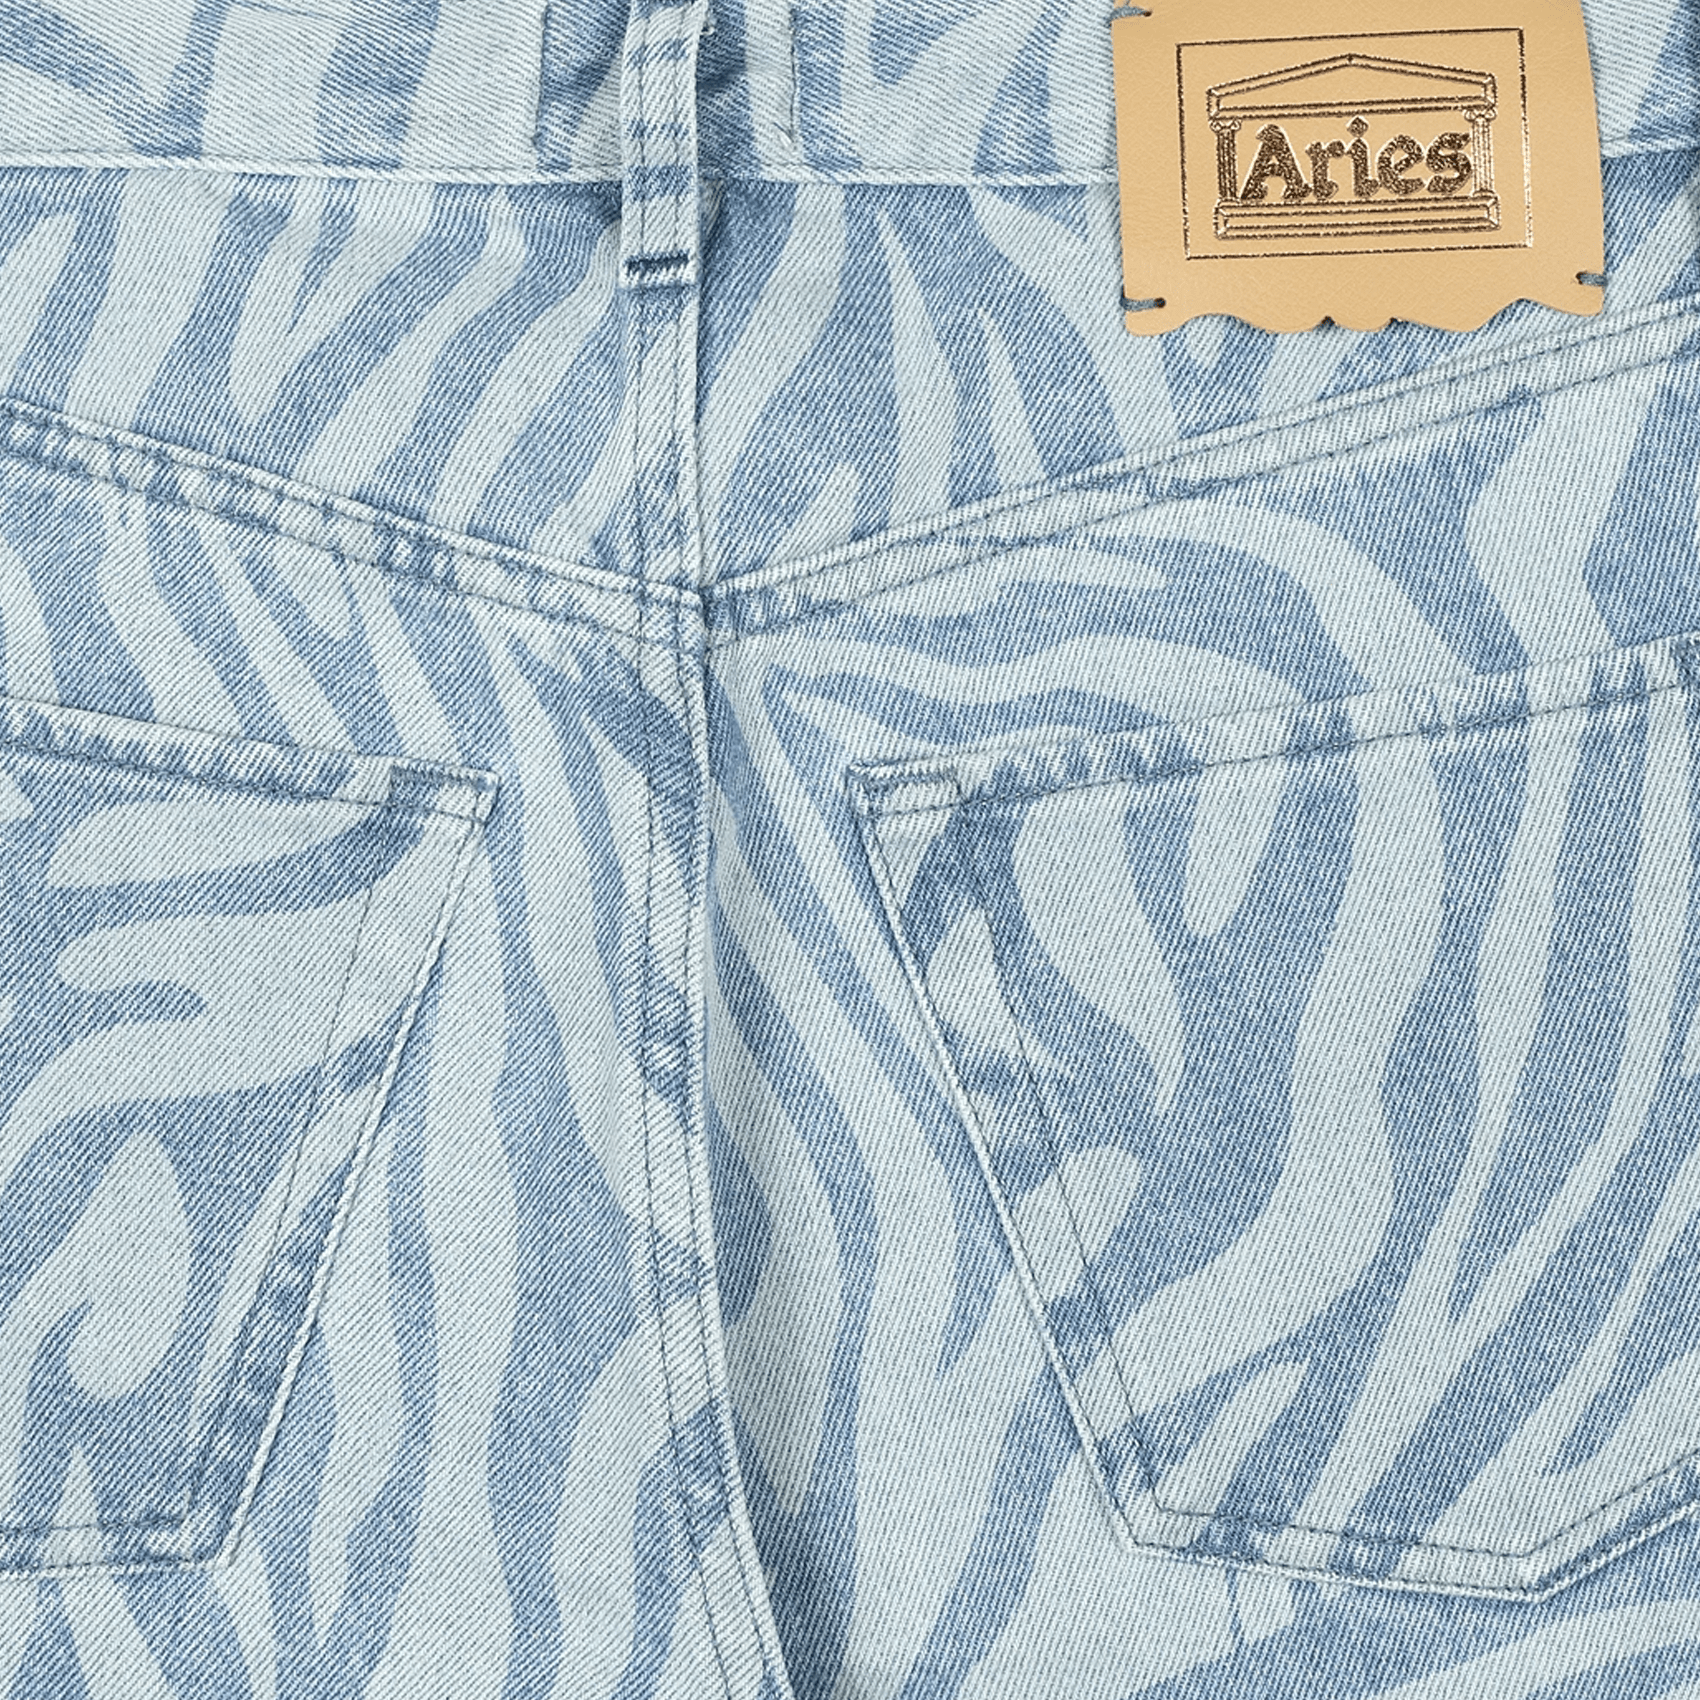 Zebra Print Lilly Jeans - Blue.